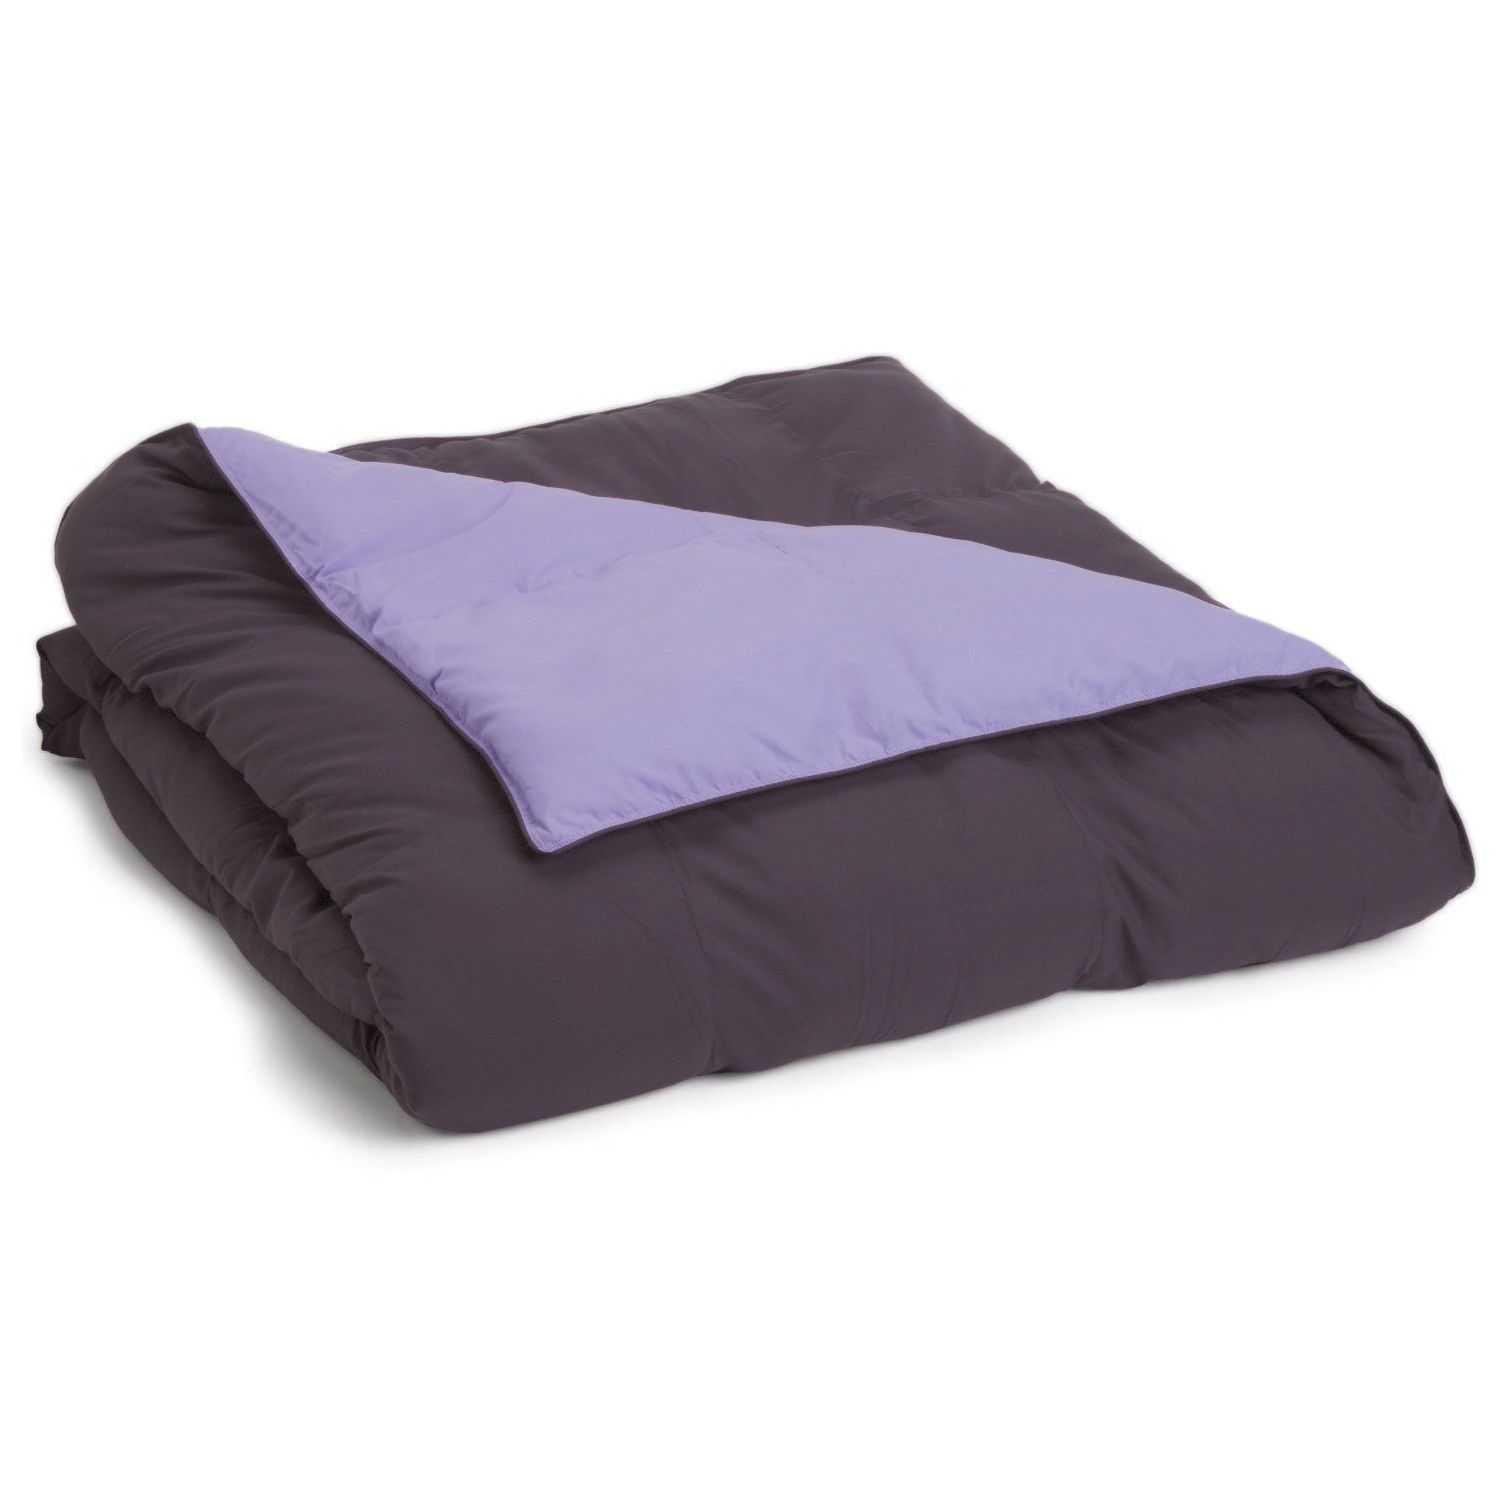 Superior Down Alternative Reversible Comforter, King, Plum/ Lilac - image 1 of 4